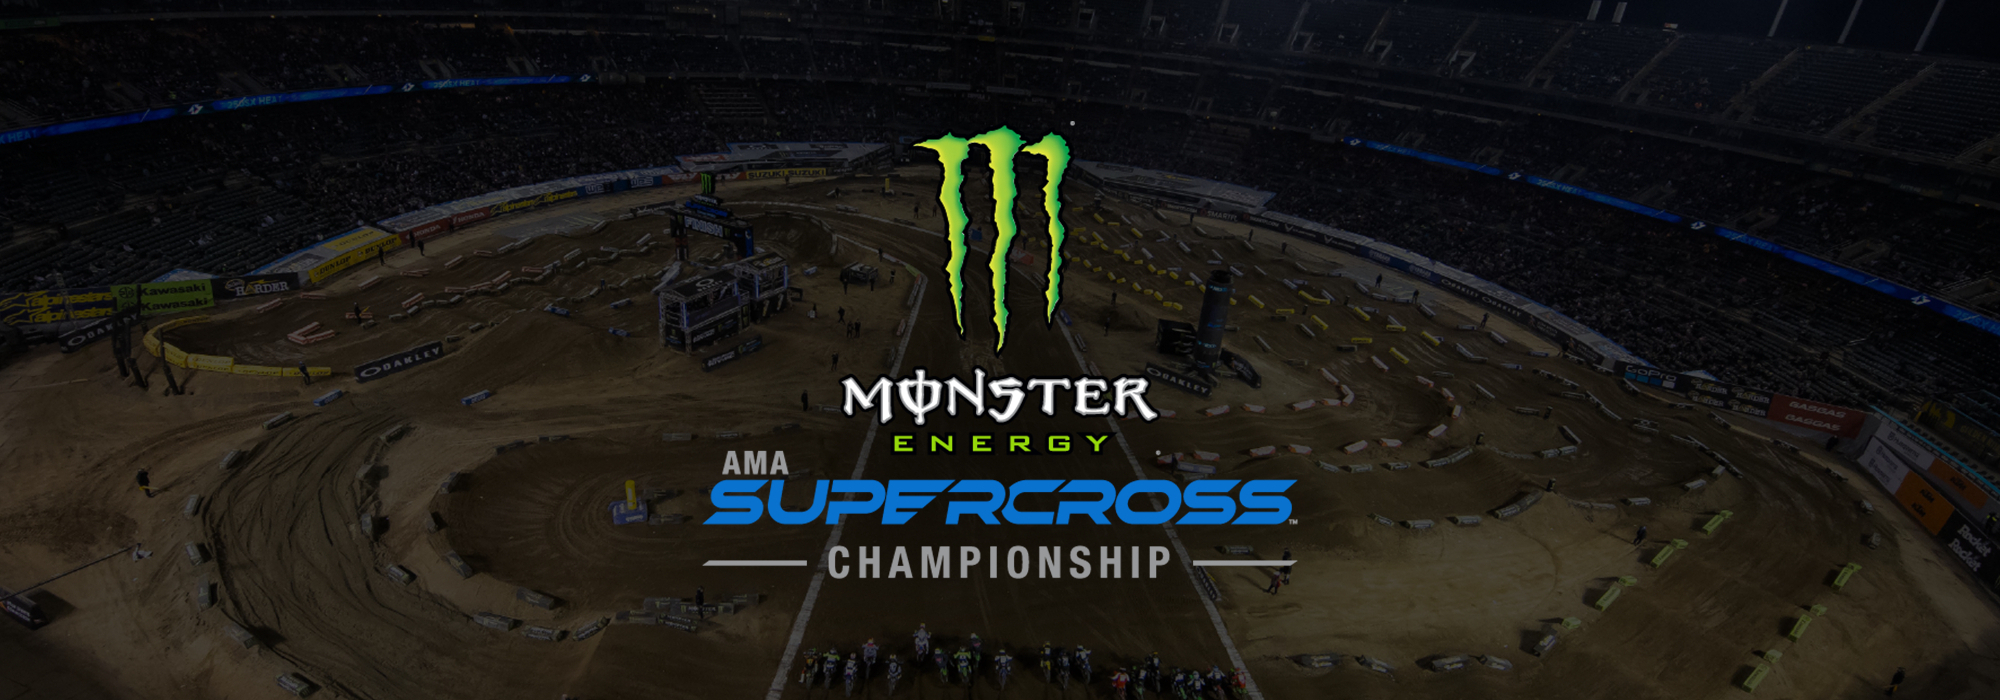 A Monster Energy AMA Supercross live event